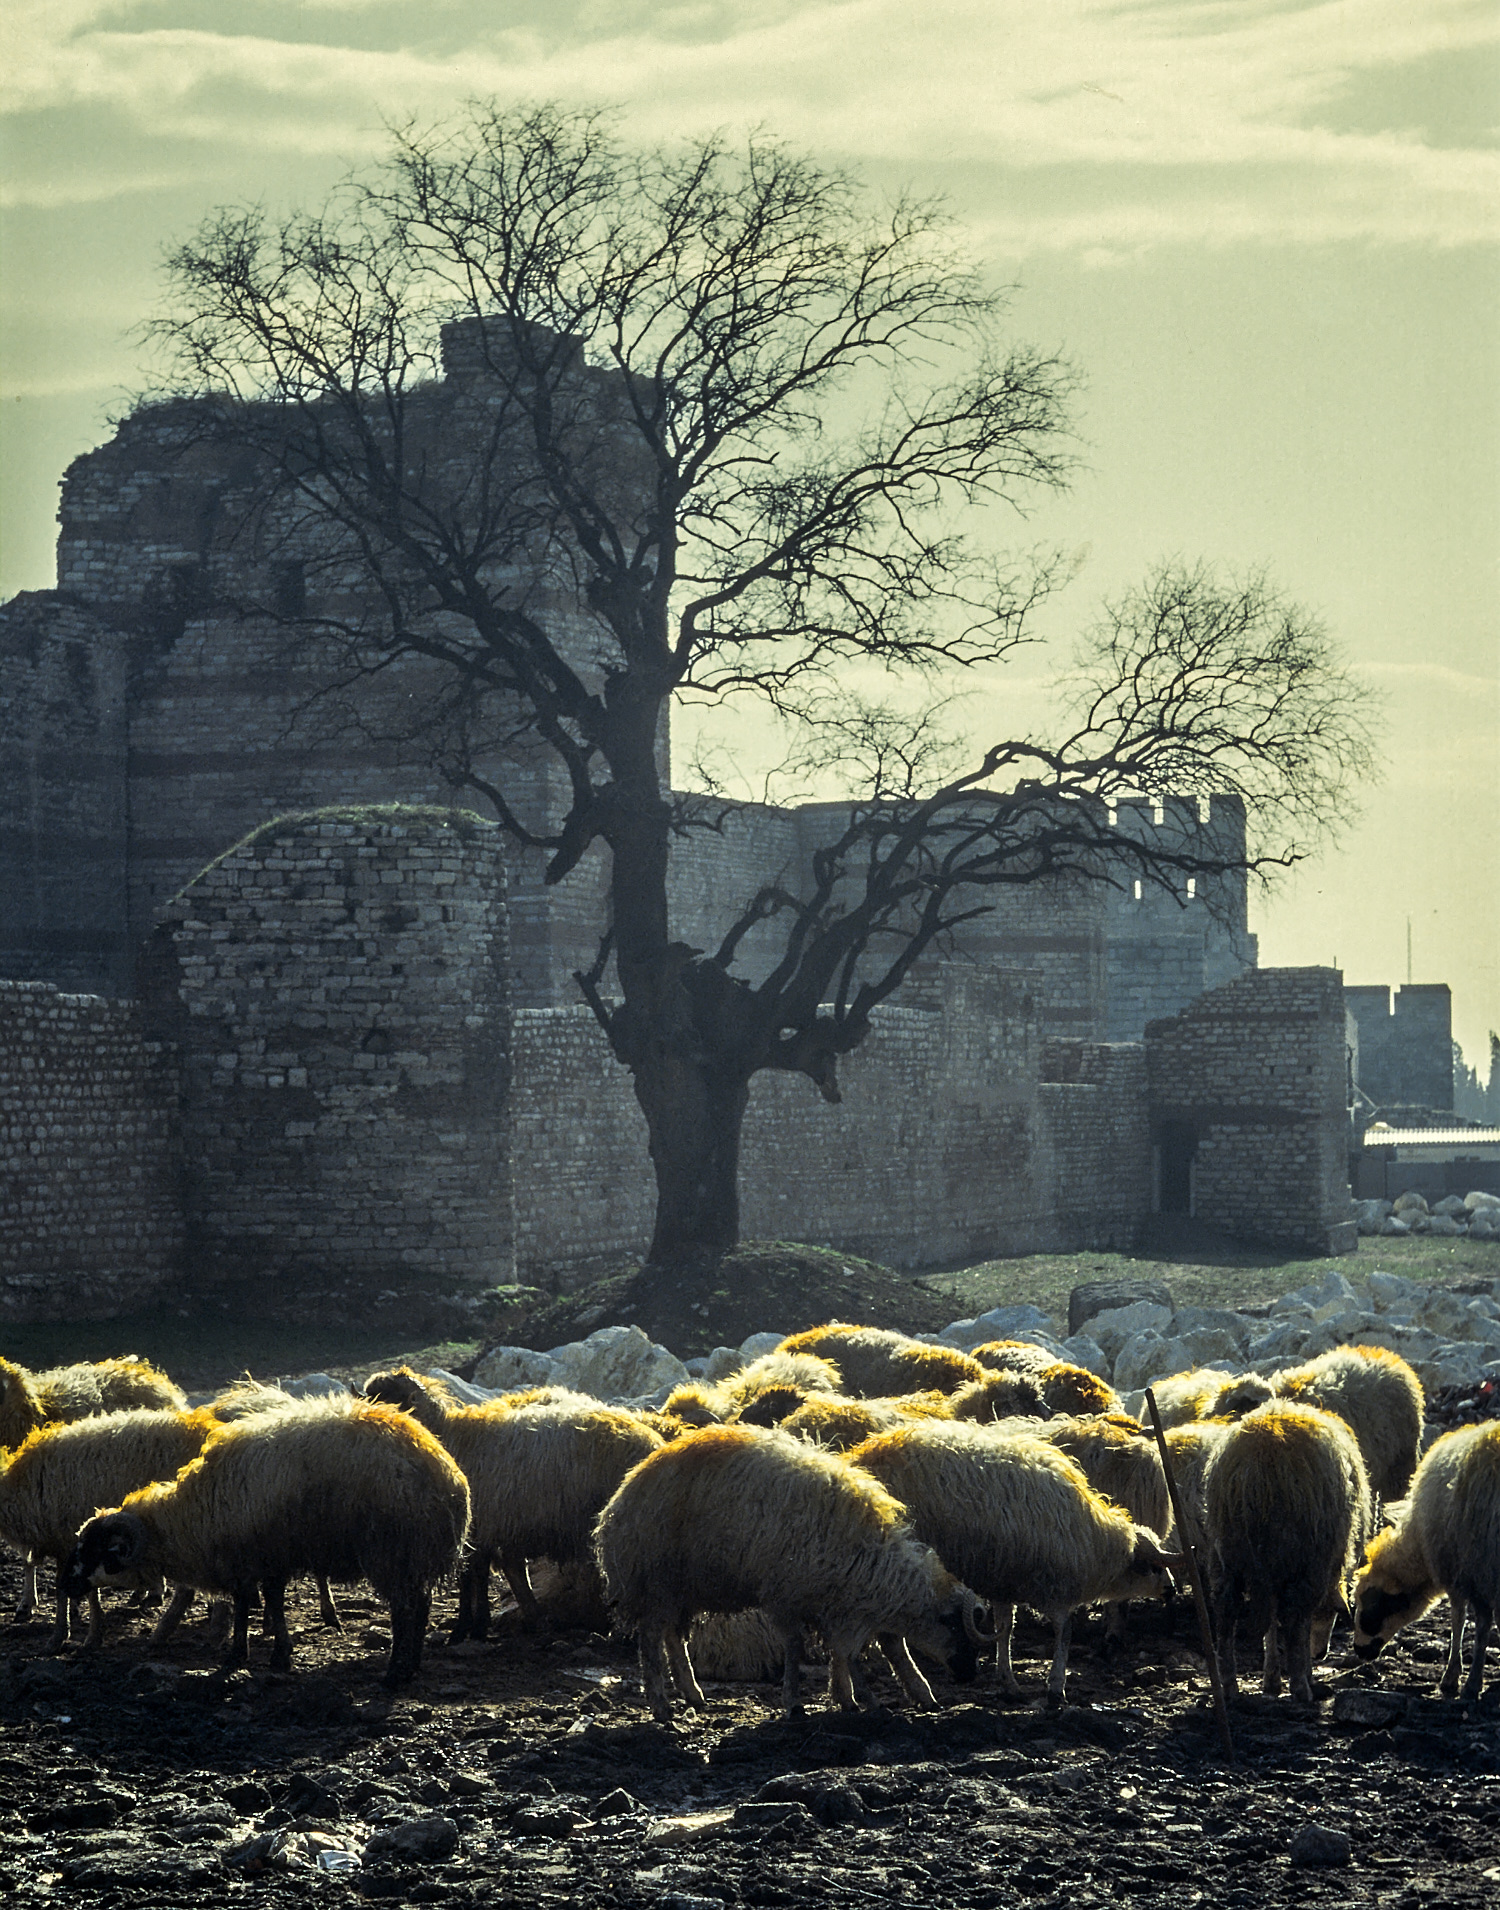 Sheep near the ancient city wall of Istanbul, Turkey